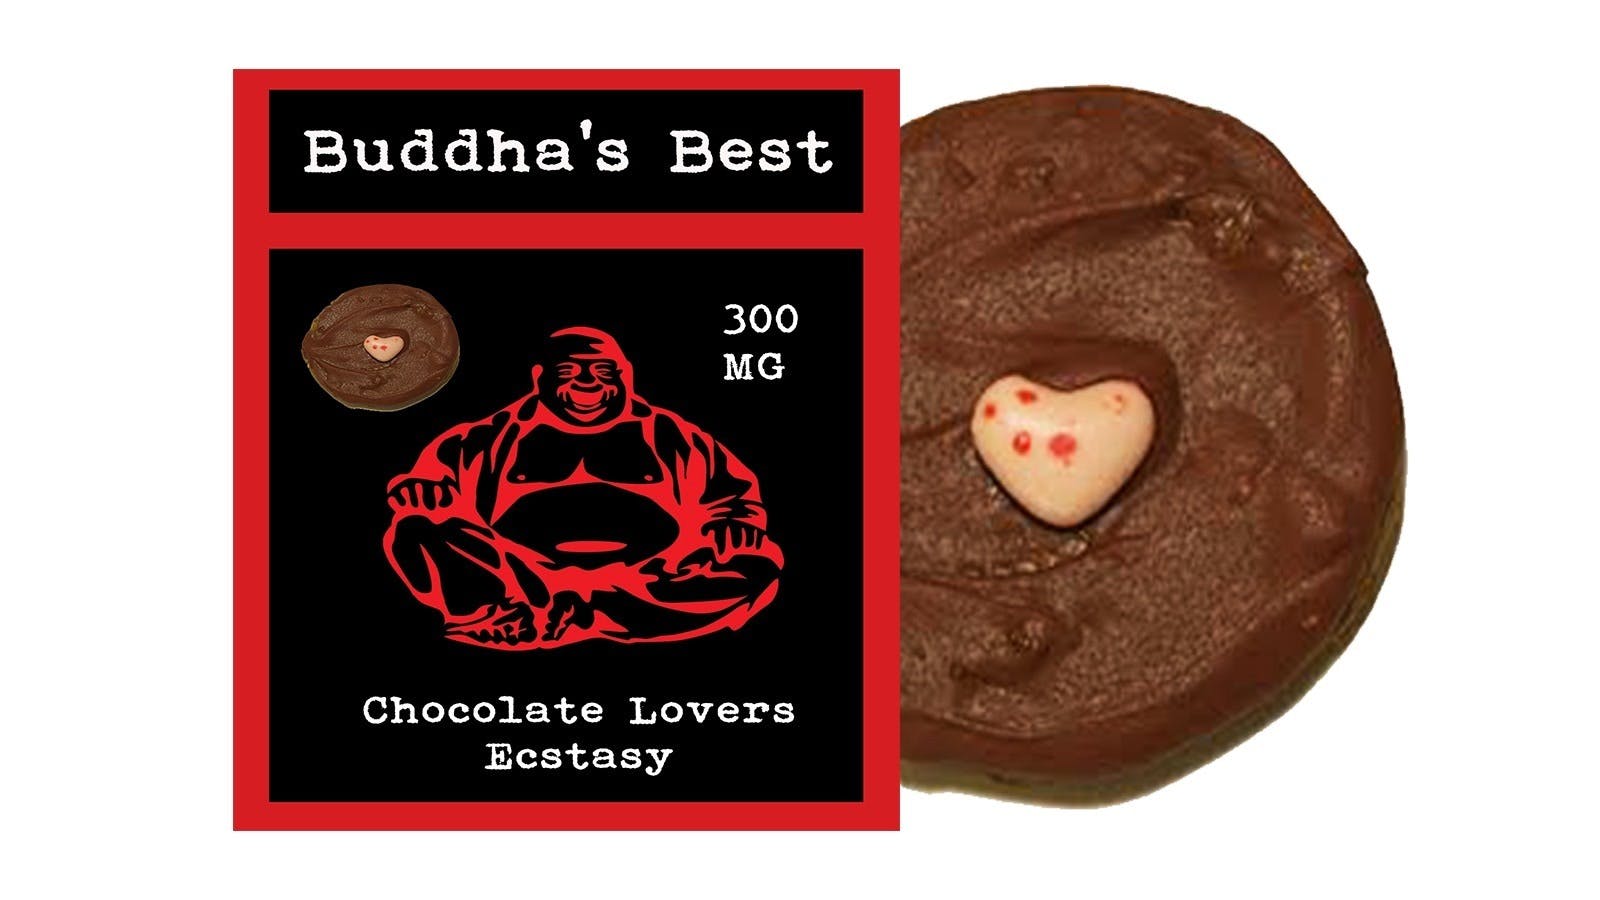 edible-buddhas-best-ar-chocolate-lovers-ecstasy-300mg